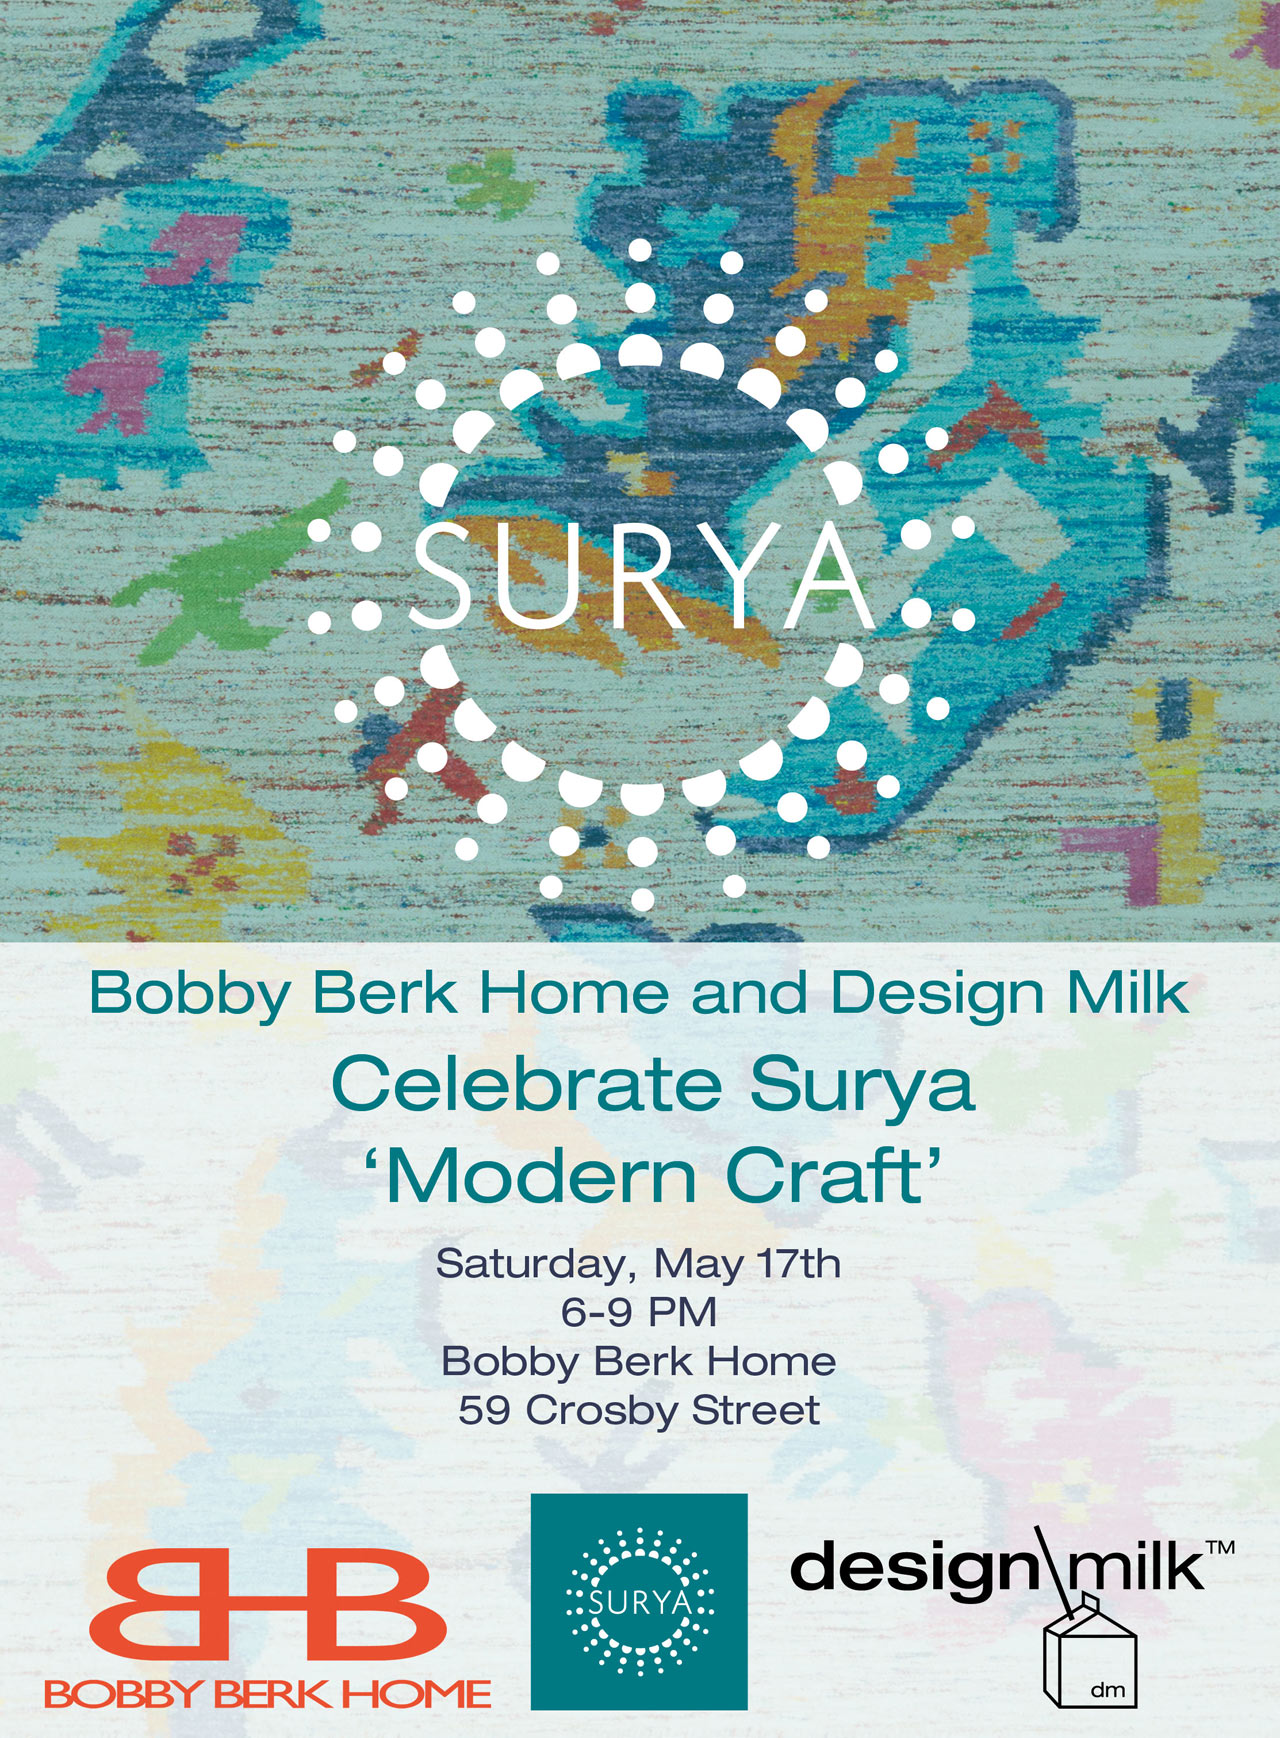 REMINDER: Surya Event at Bobby Berk Home This Saturday!